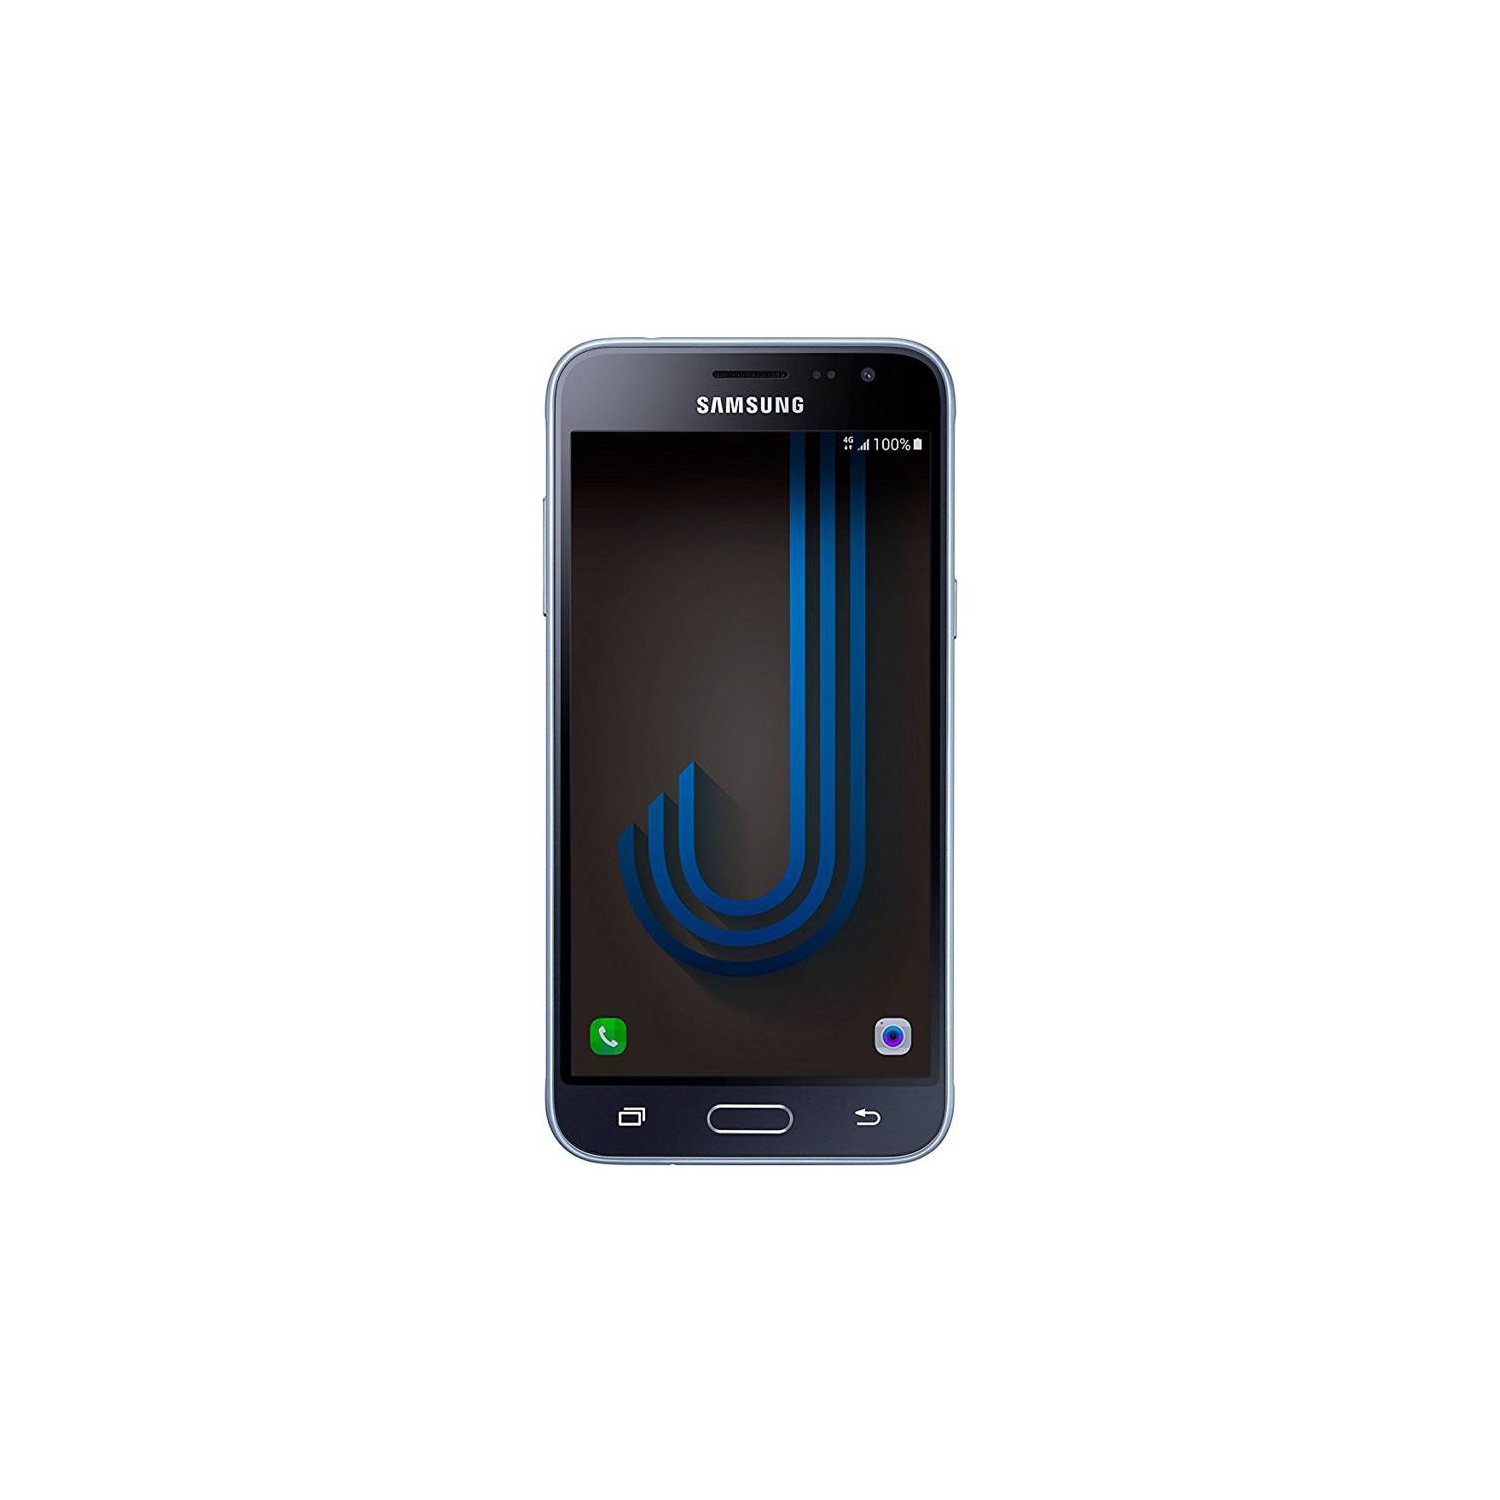 Samsung Galaxy J3 2016 16GB - Black - Unlocked - Open Box (10/10 condition)